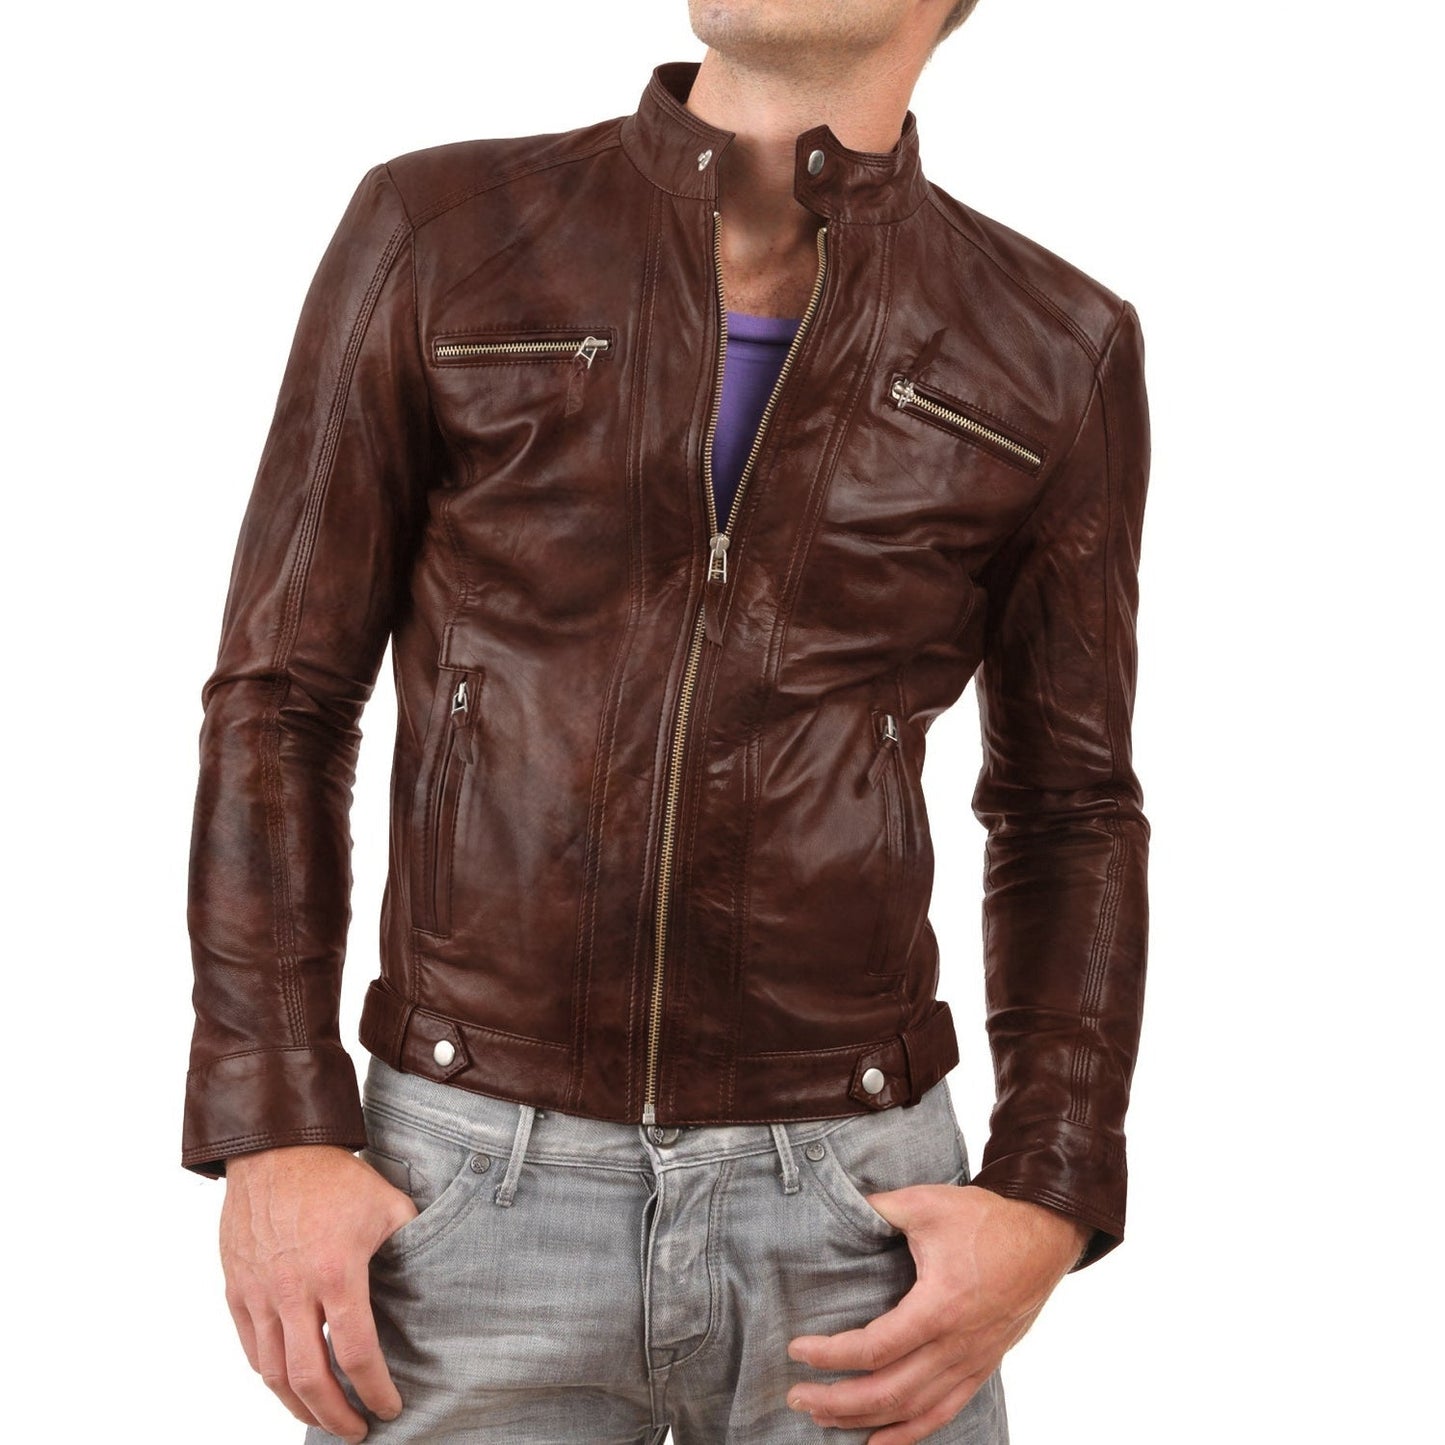 Leather Jackets Hub Mens Genuine Lambskin Leather Jacket (Black, Racer Jacket) - 1501275